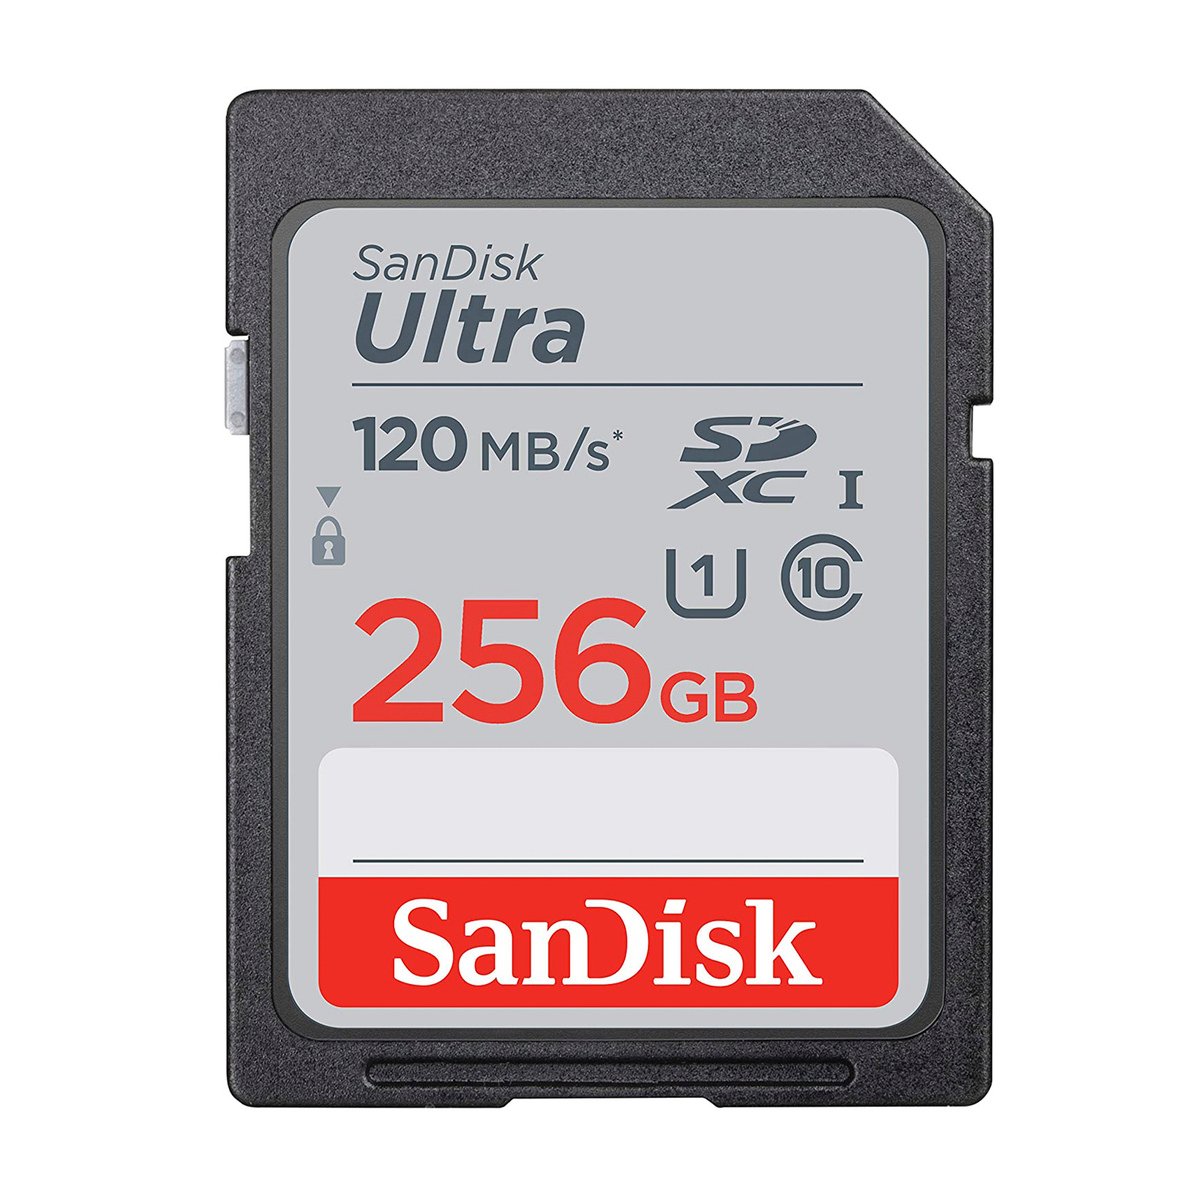 SanDisk Ultra 256GB SDXC Memory Card 120MB/s